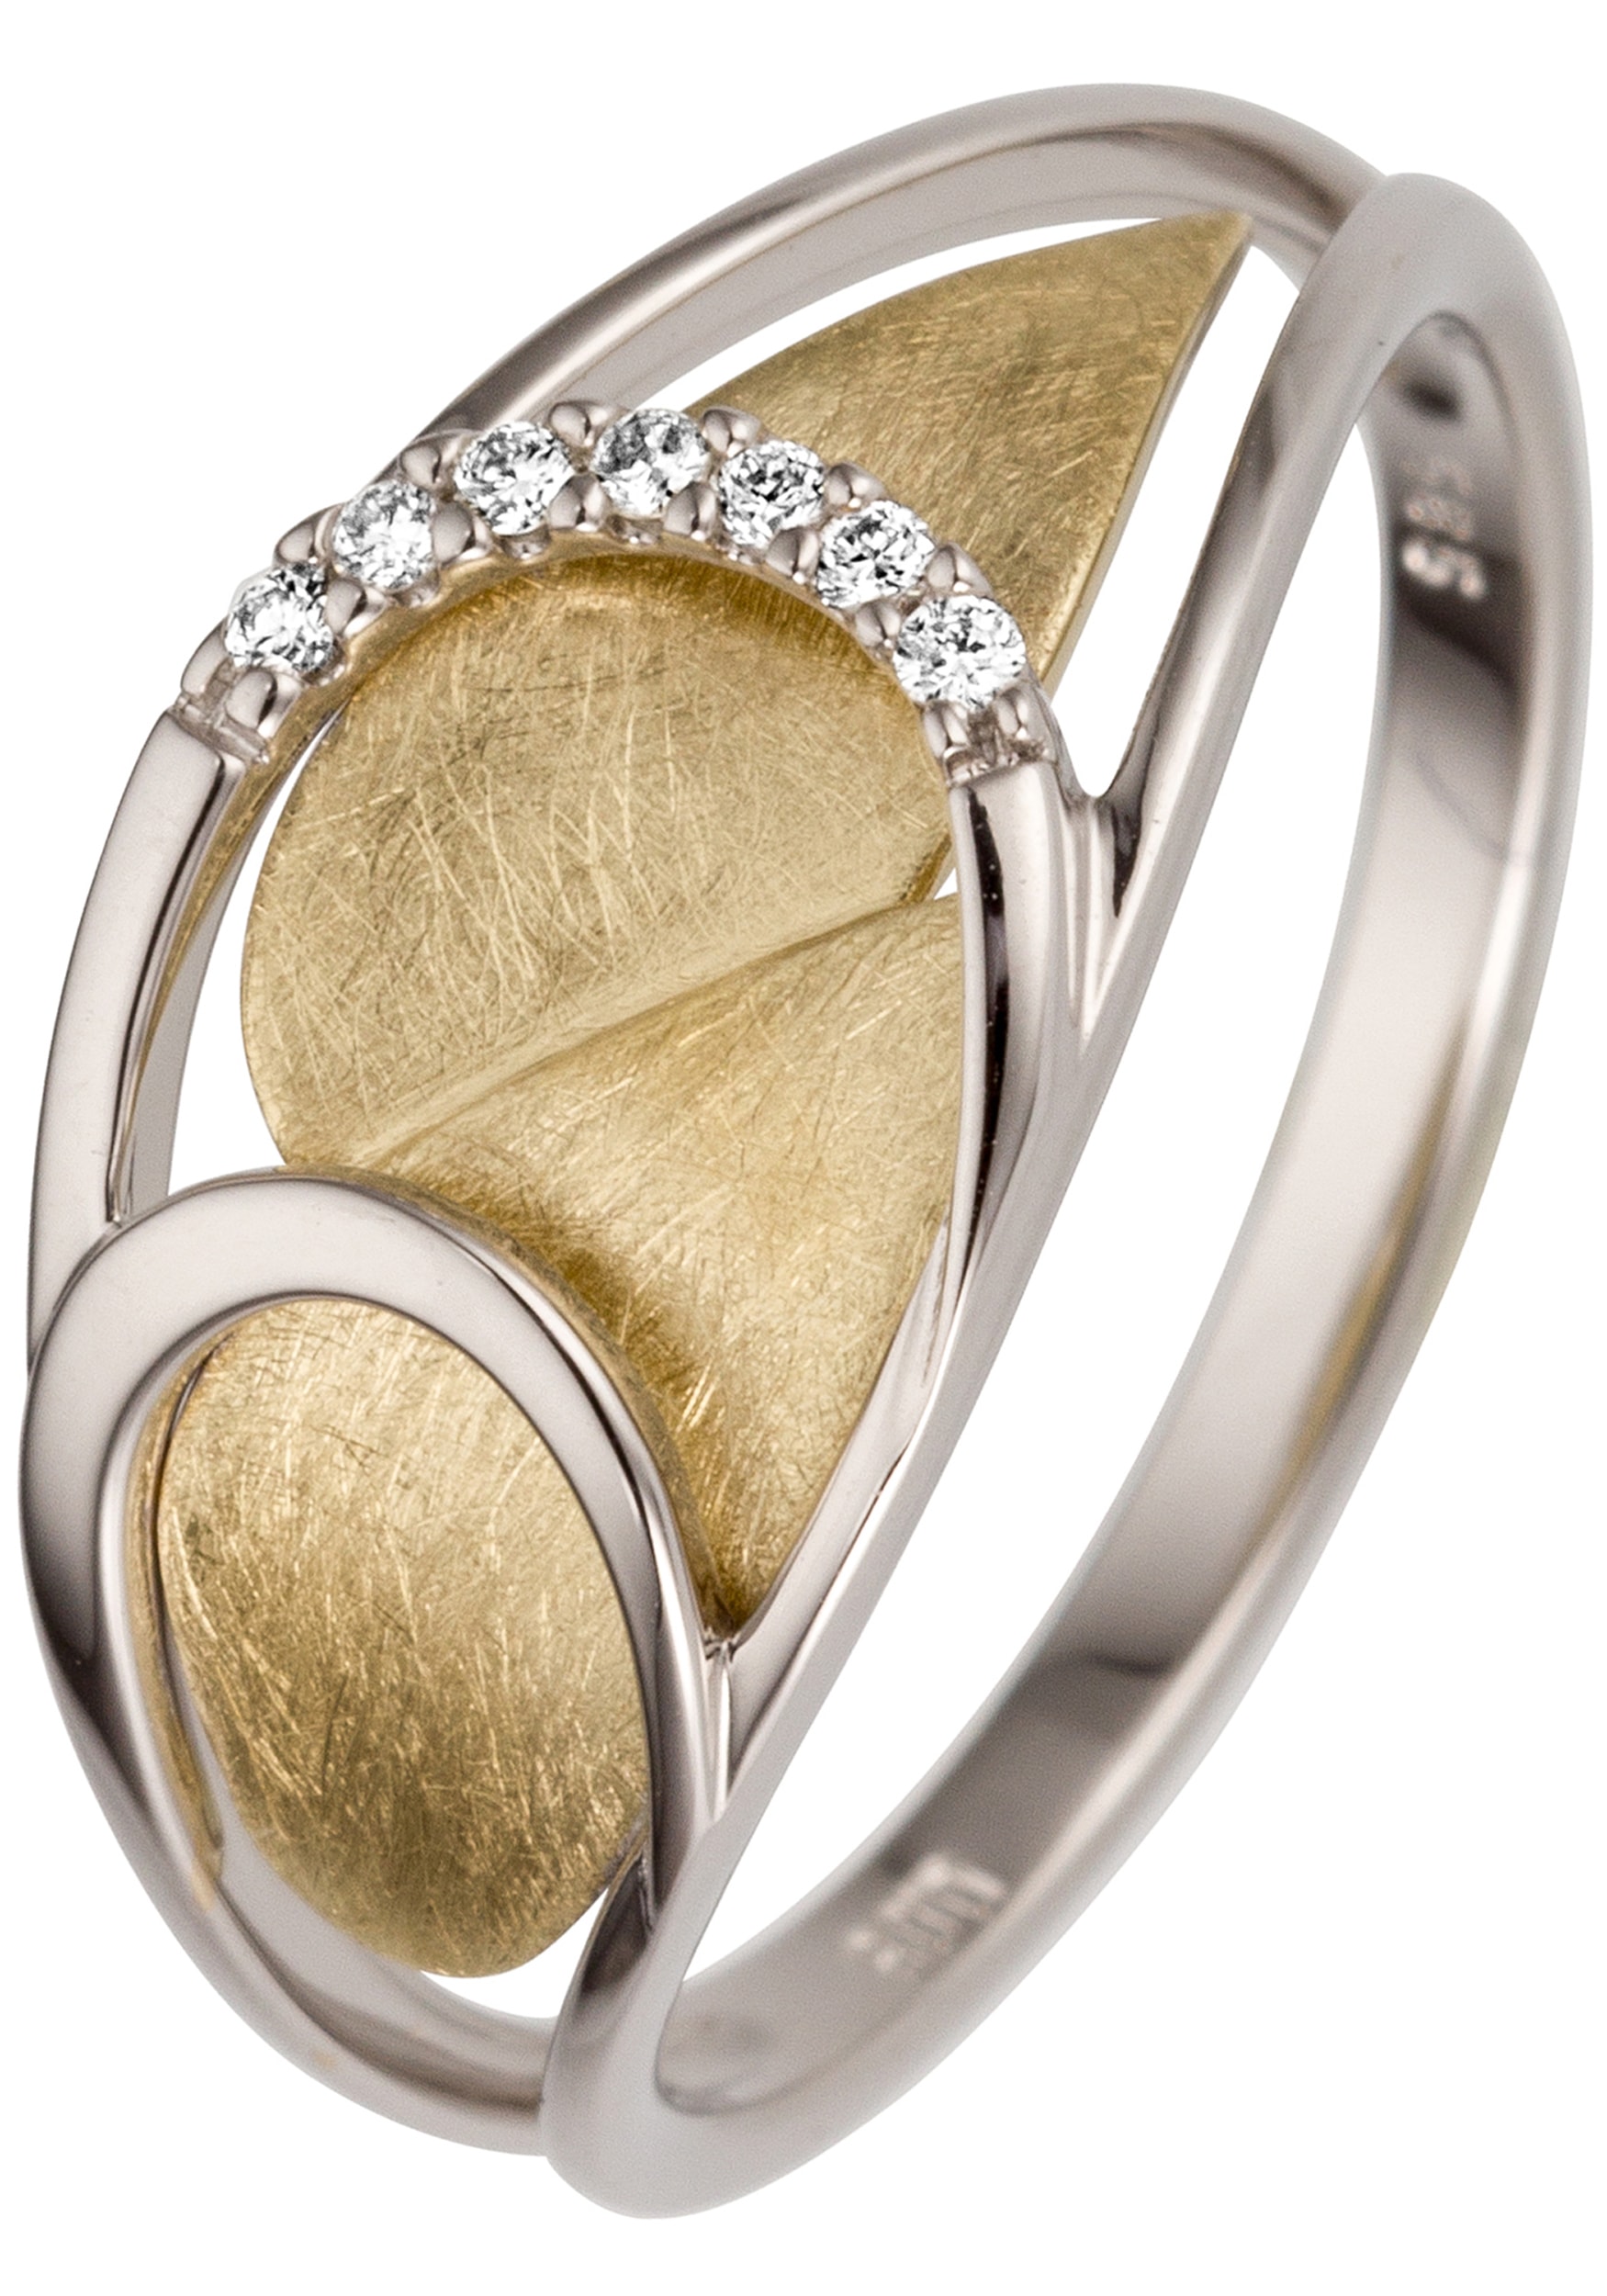 JOBO Fingerring, 585 Gold bicolor mit 7 Diamanten kaufen | BAUR